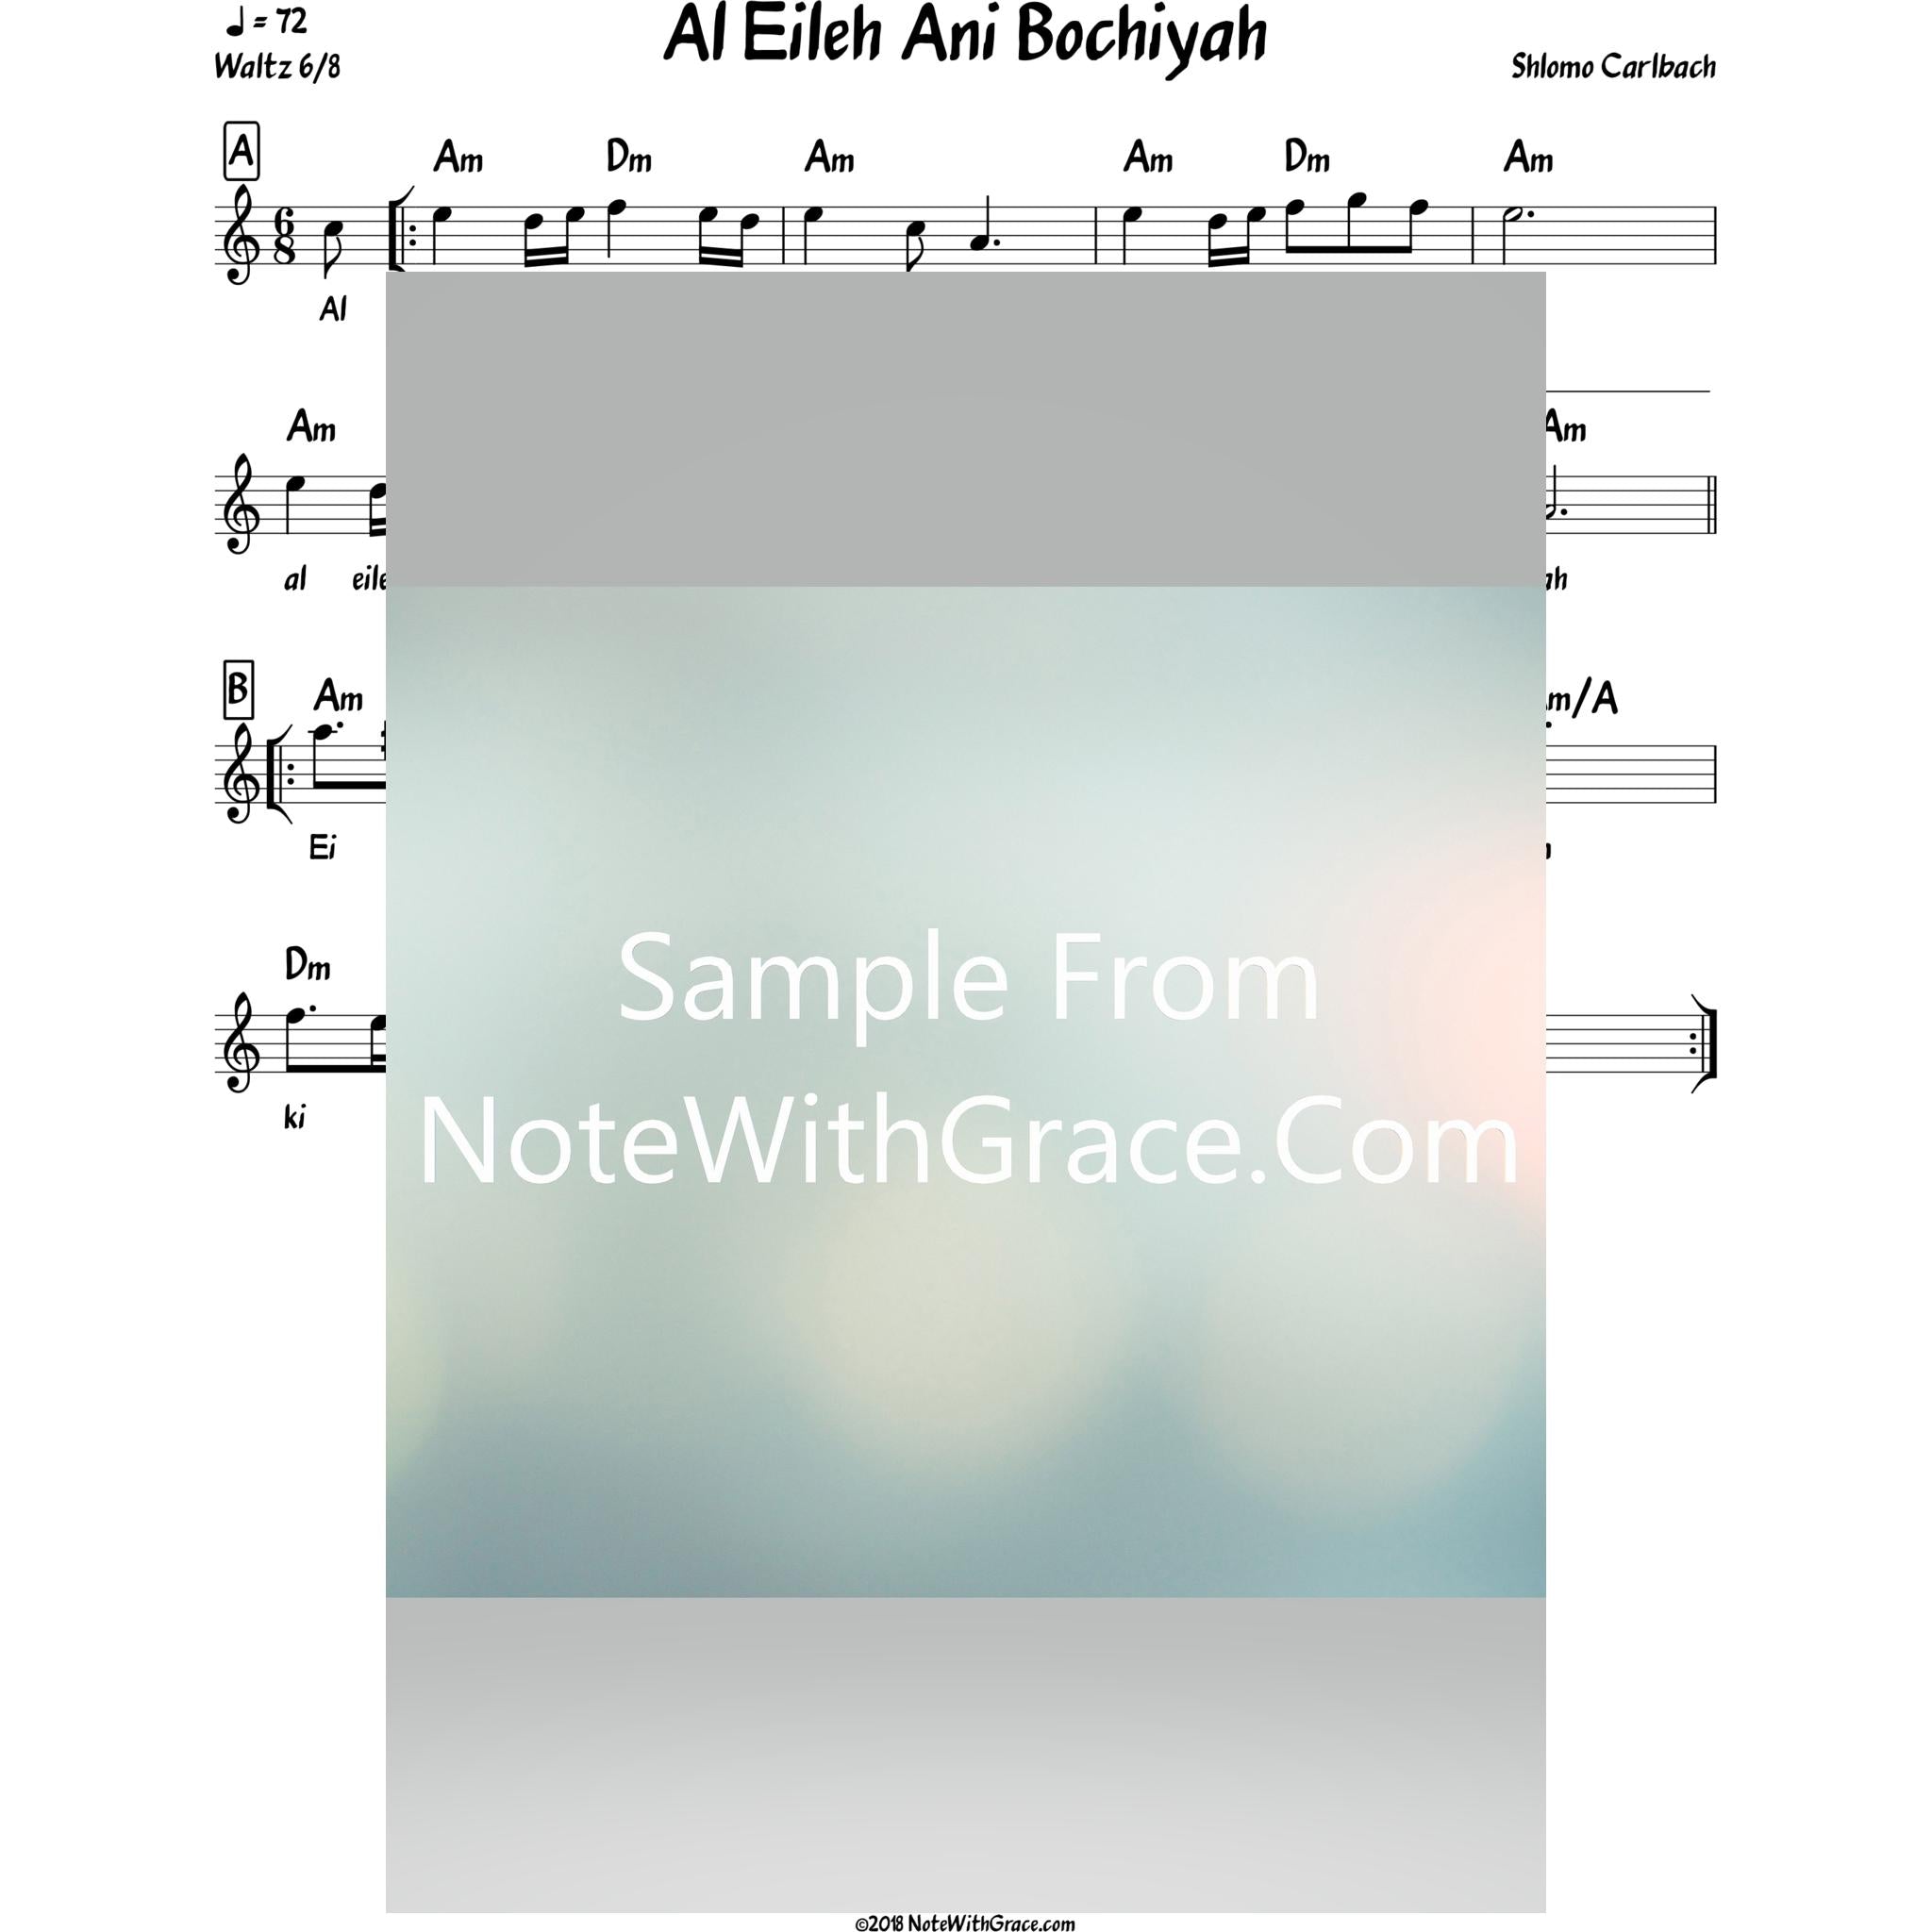 Al Eileh Ani Bochiyah Lead Sheet (Shlomo Carlbach)-Sheet music-NoteWithGrace.com